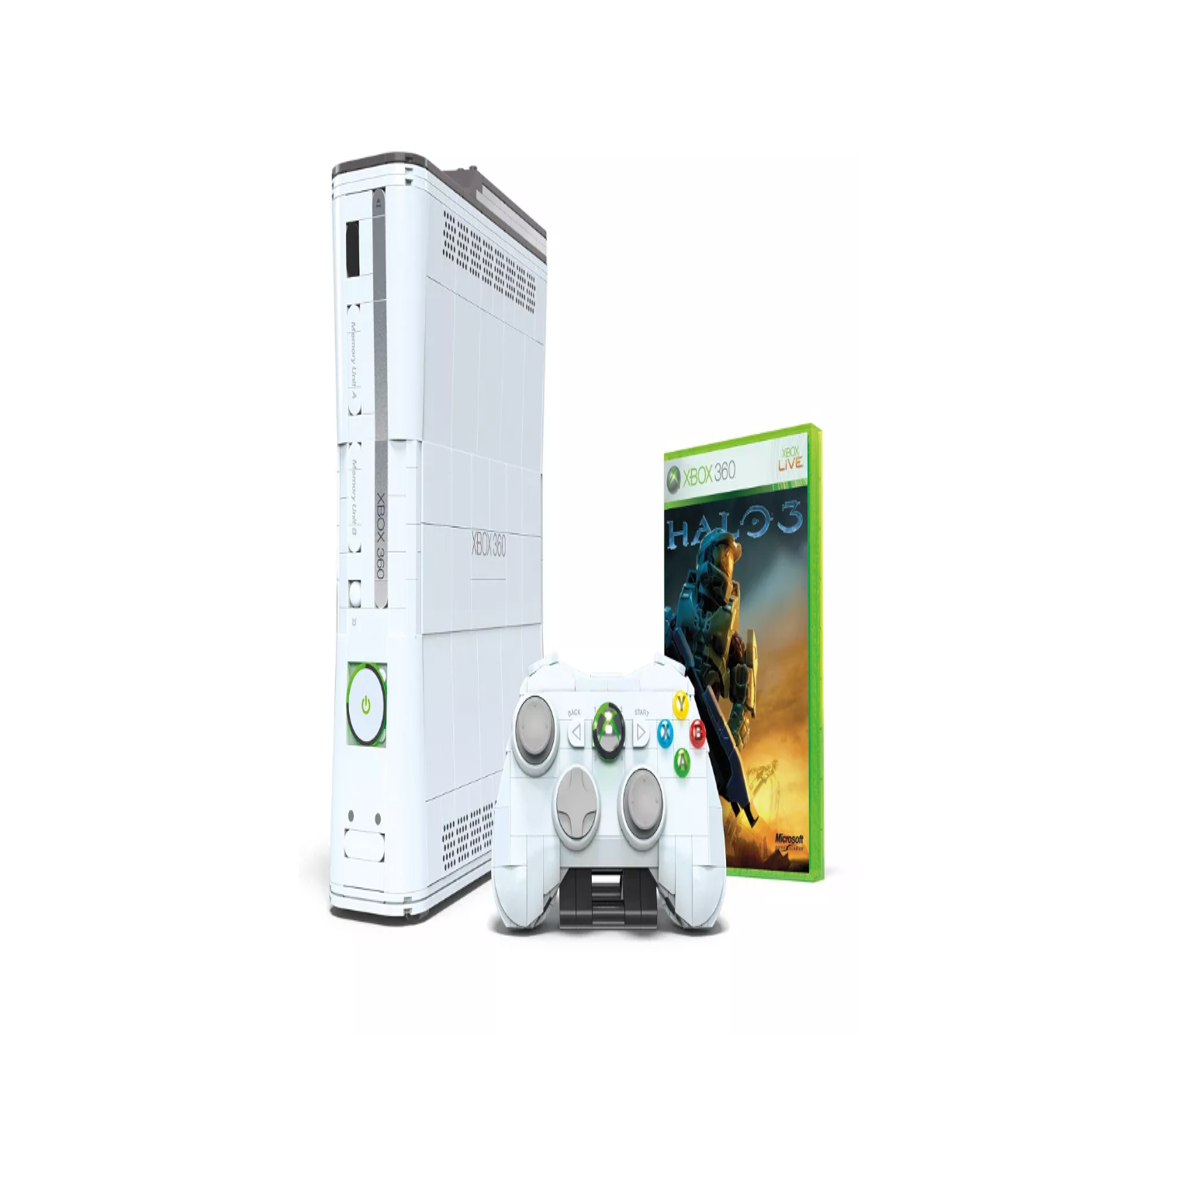 Conjunto De 5 Jogos Xbox 360, Videojogos e Consolas, à venda, Lisboa